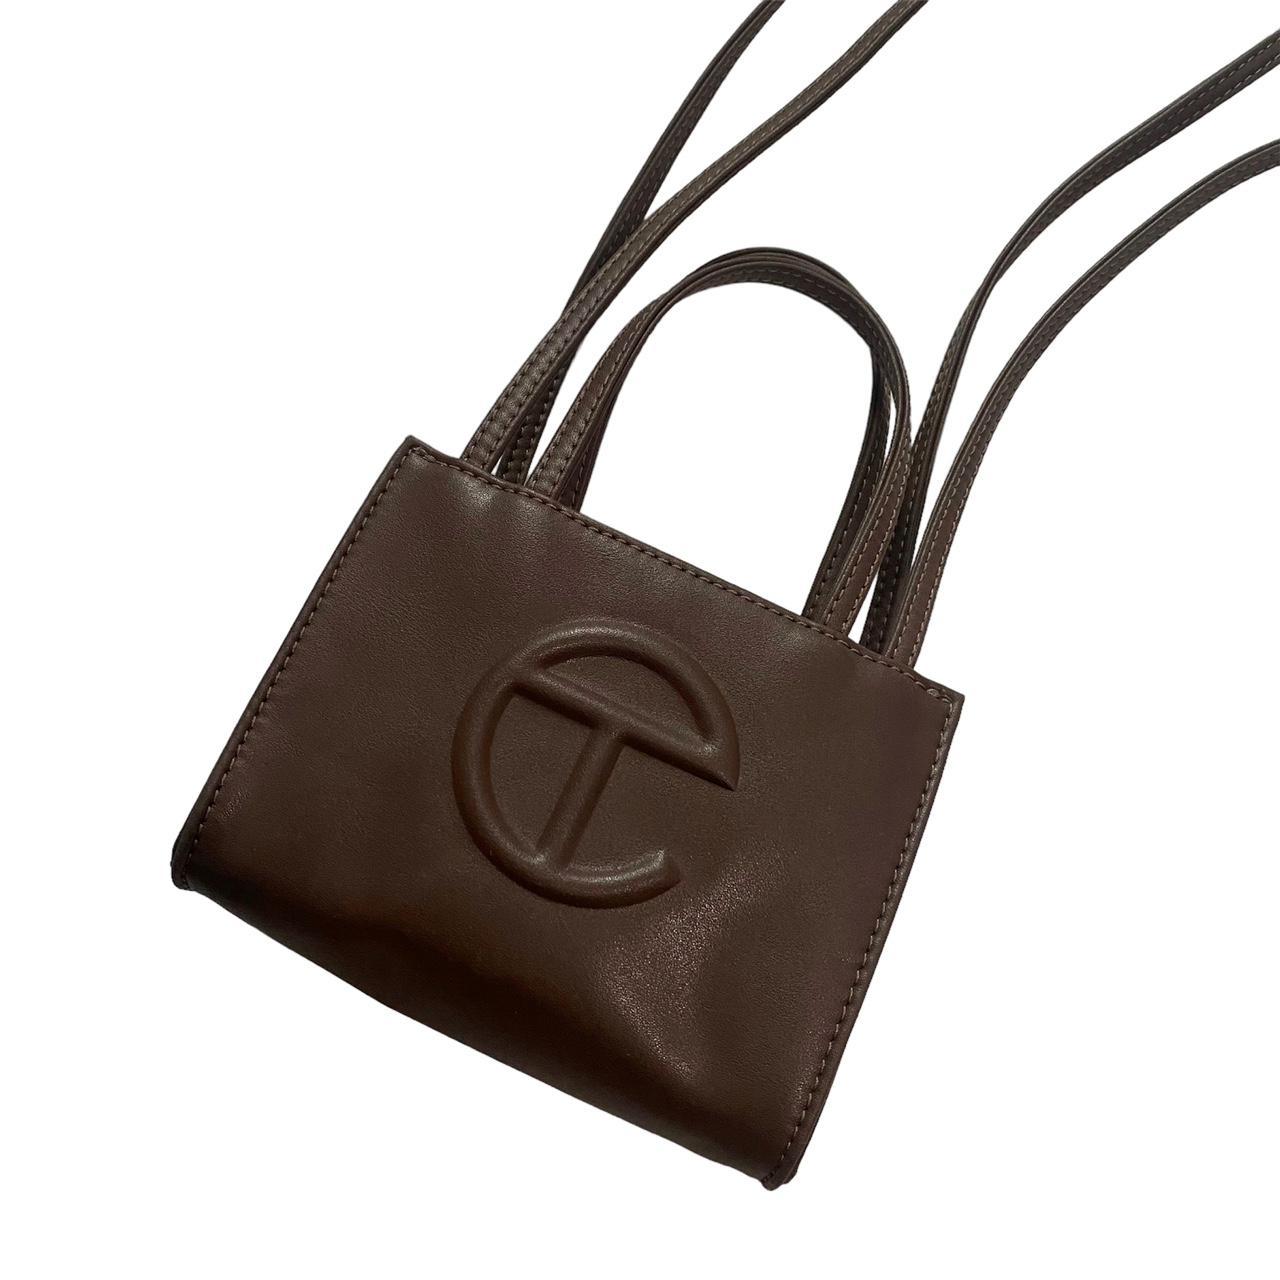 Telfar Shopping Bag Small Chocolate